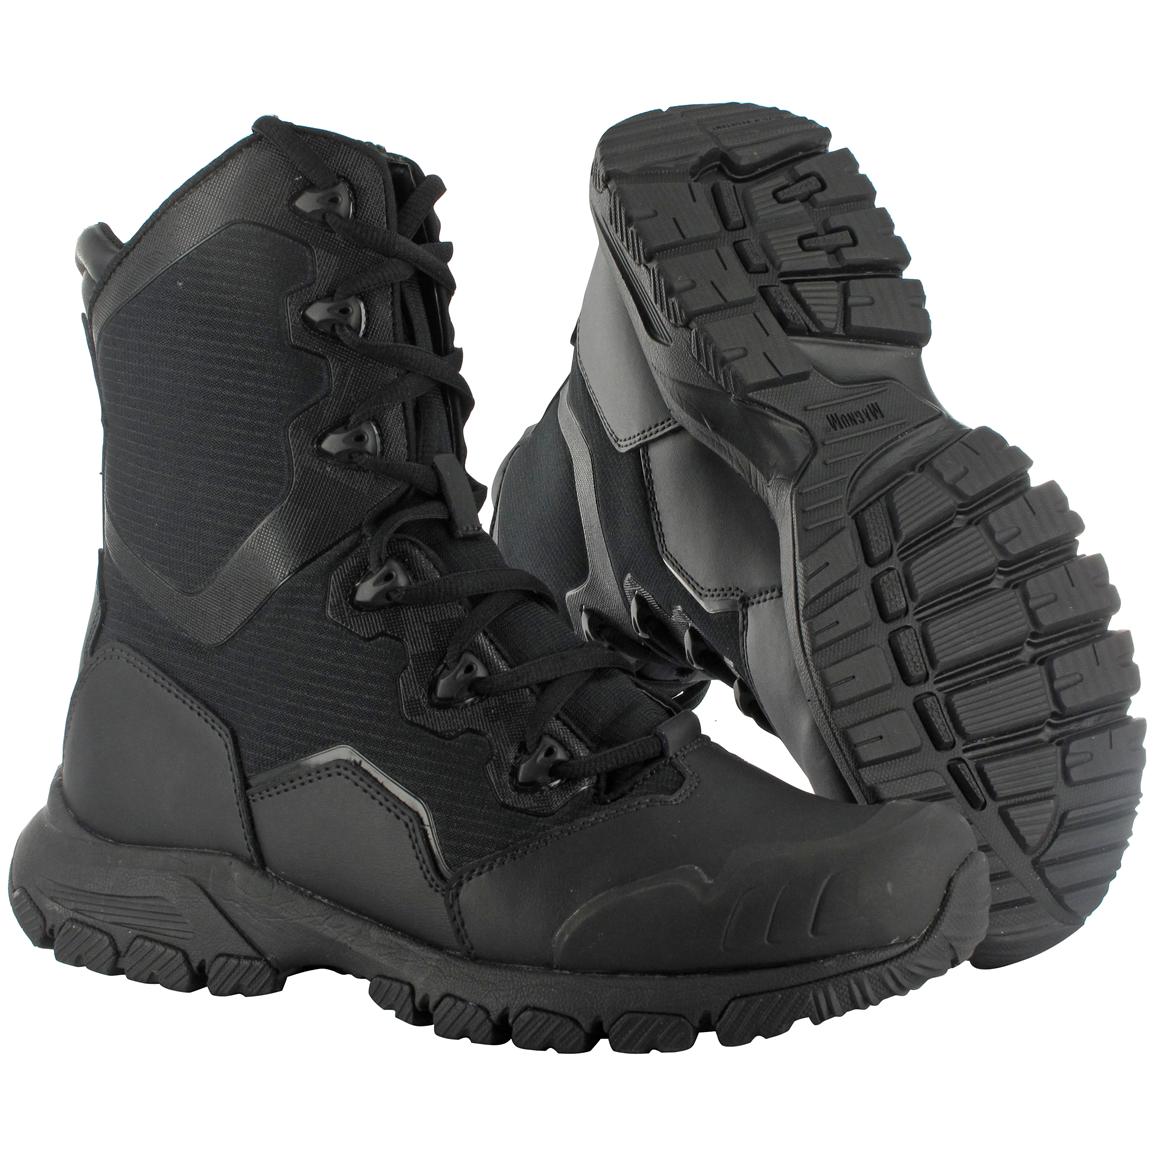 Mach 1 8.0 Side-zip Tactical Boots 